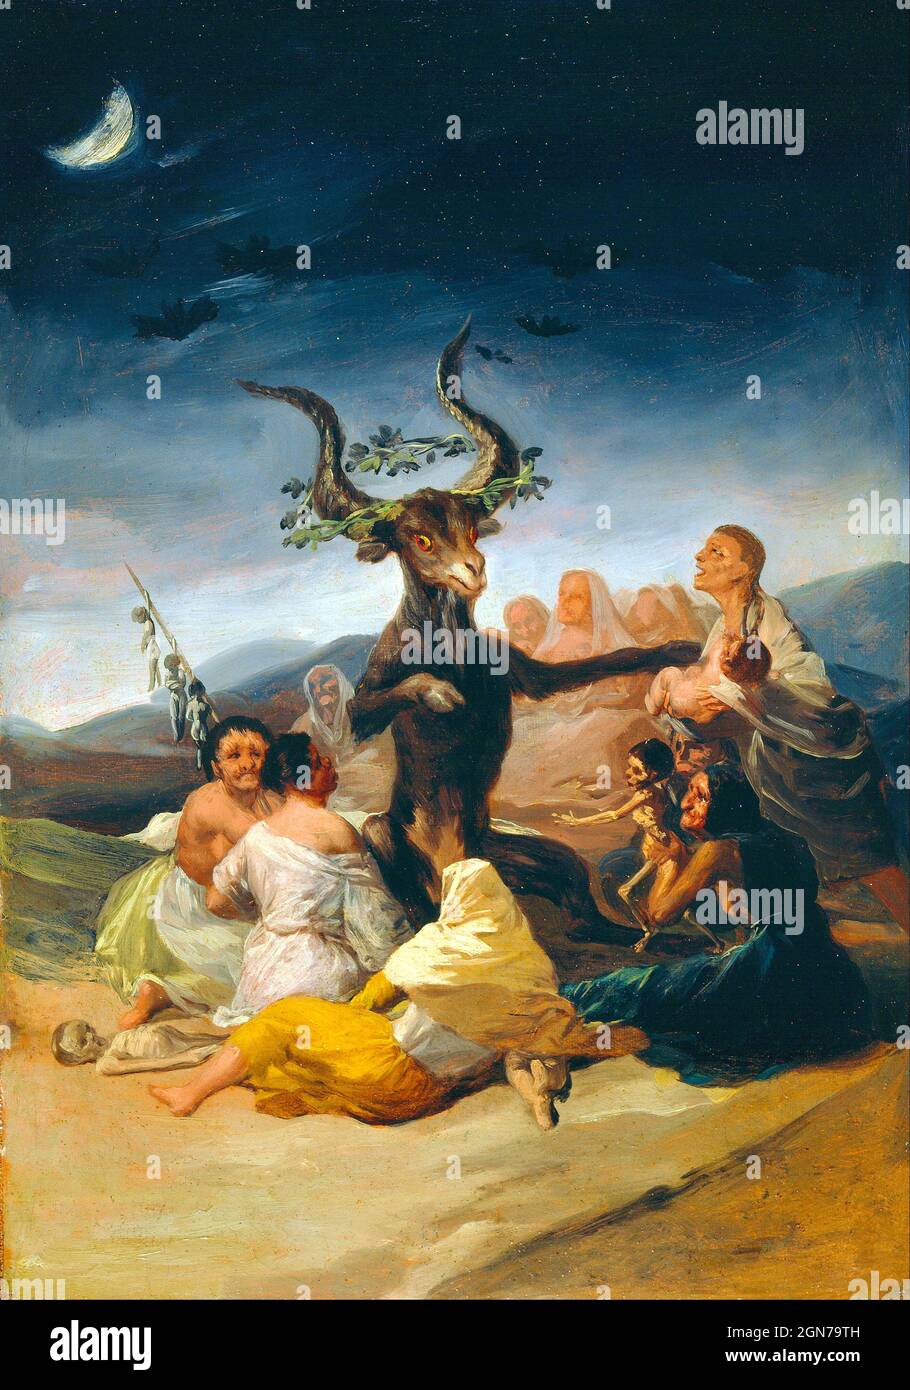 Œuvre de Francisco de Goya - Sabbat des sorcières - 1798 Banque D'Images